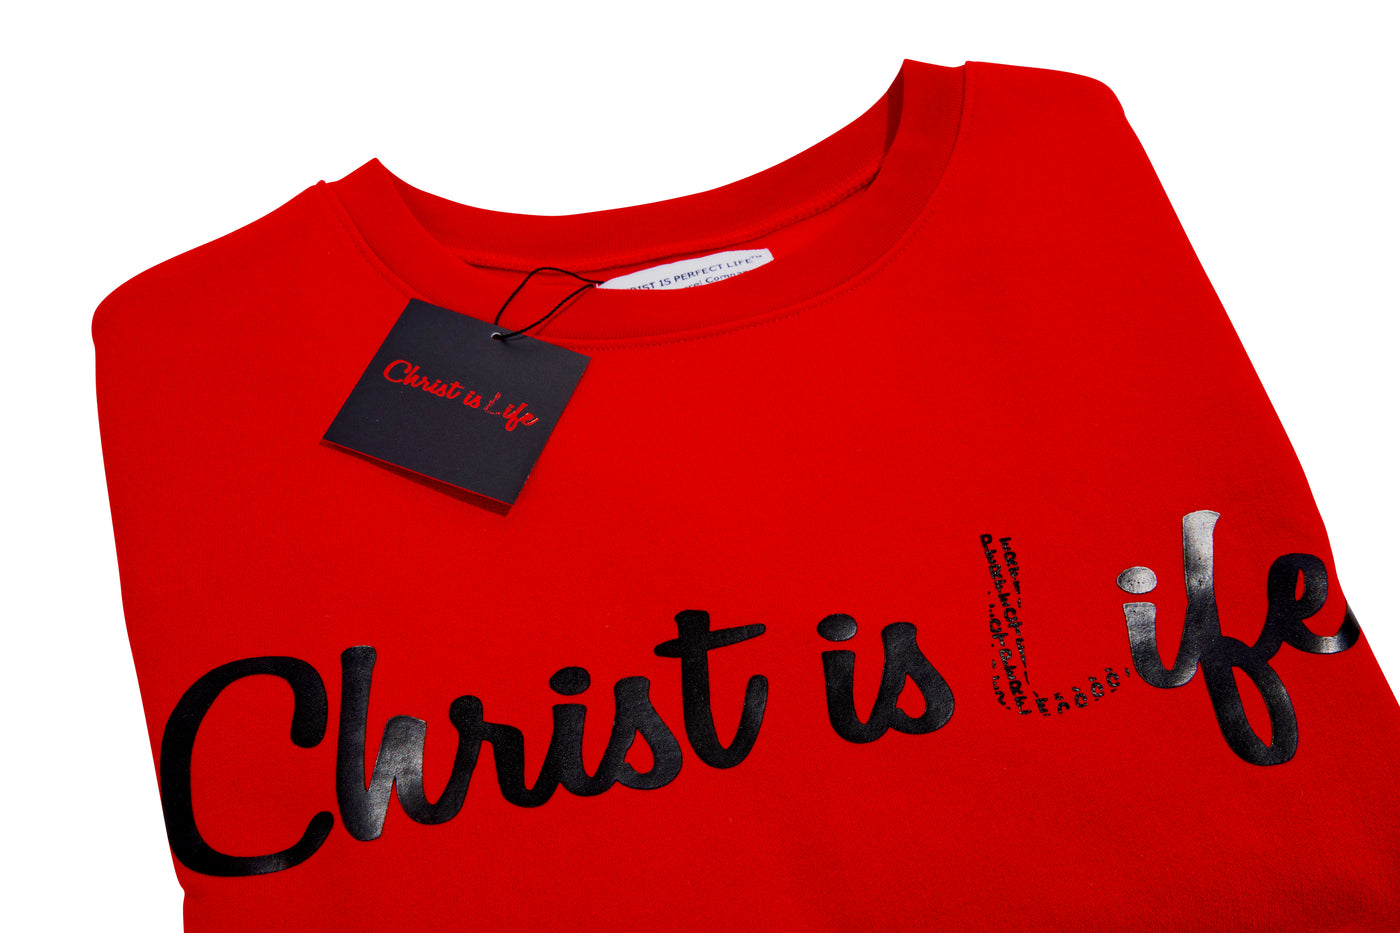 Christ is Perfect Life (The Genesis) Sweatshirt